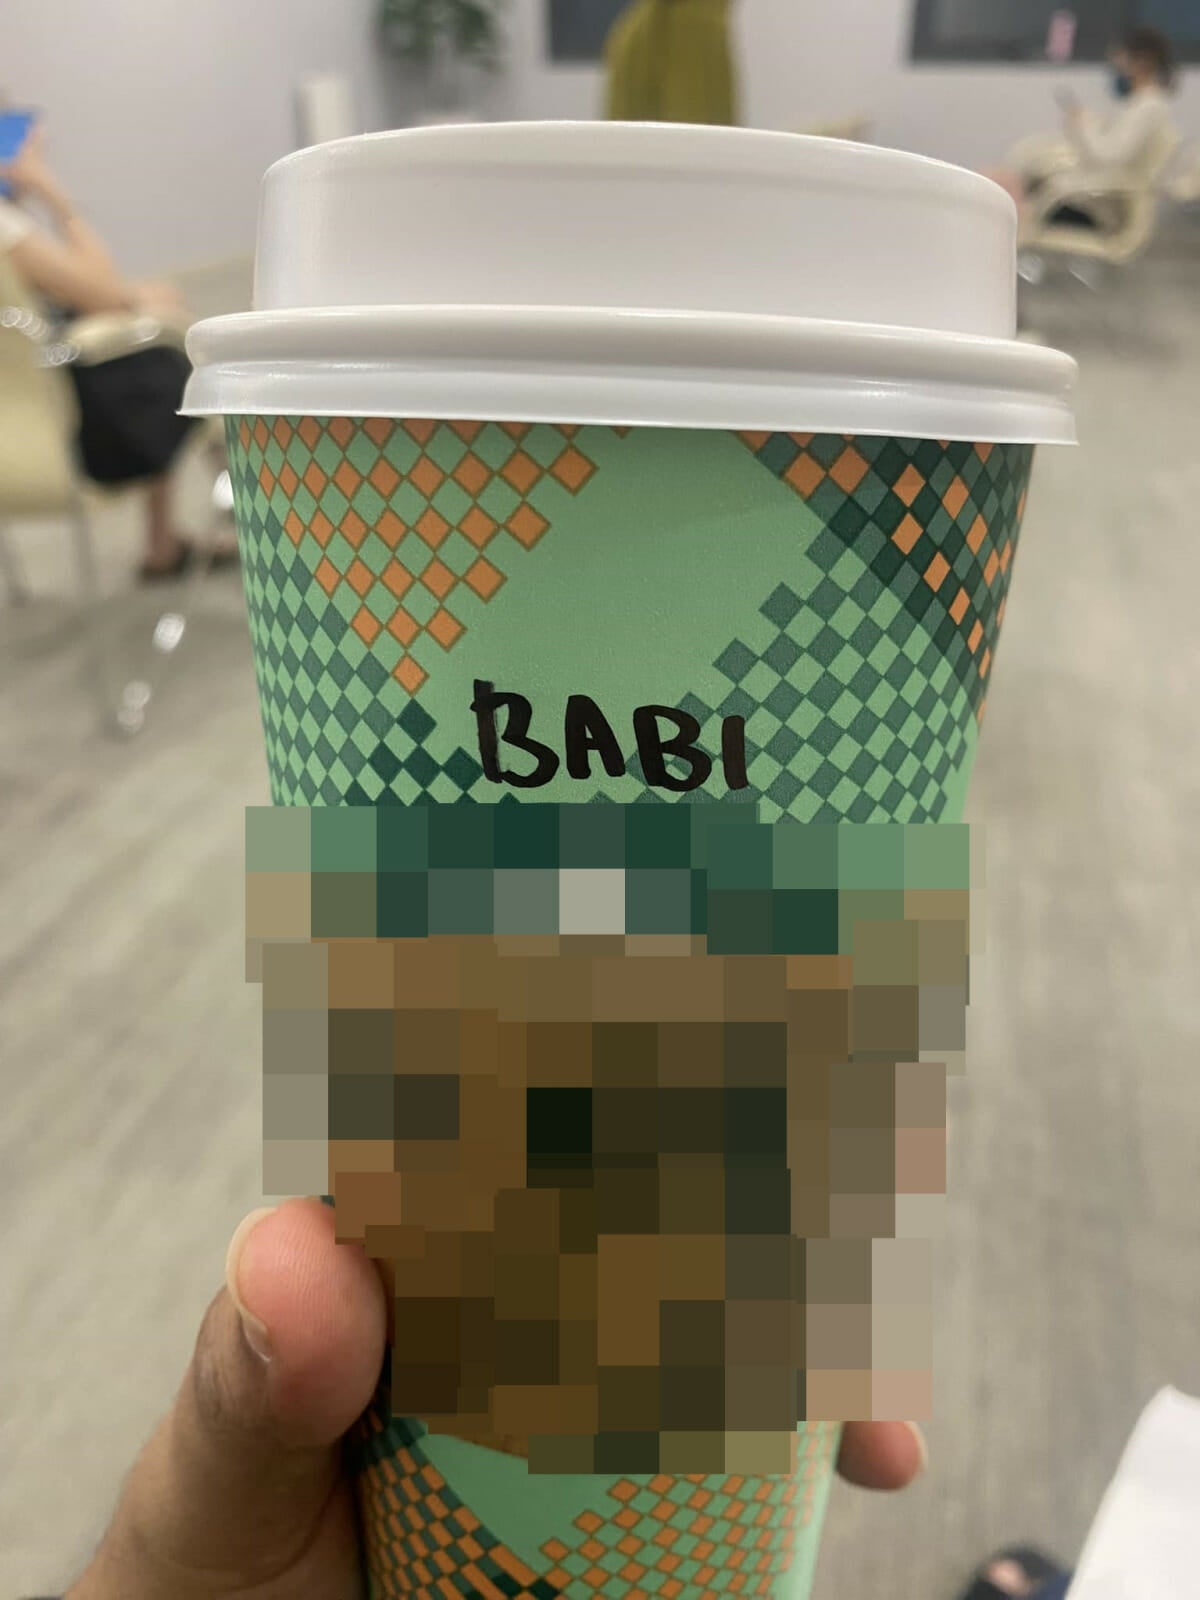 Starbucks Malaysia Staff Mispelled Customers Name Bavi Into Babi Mosaic